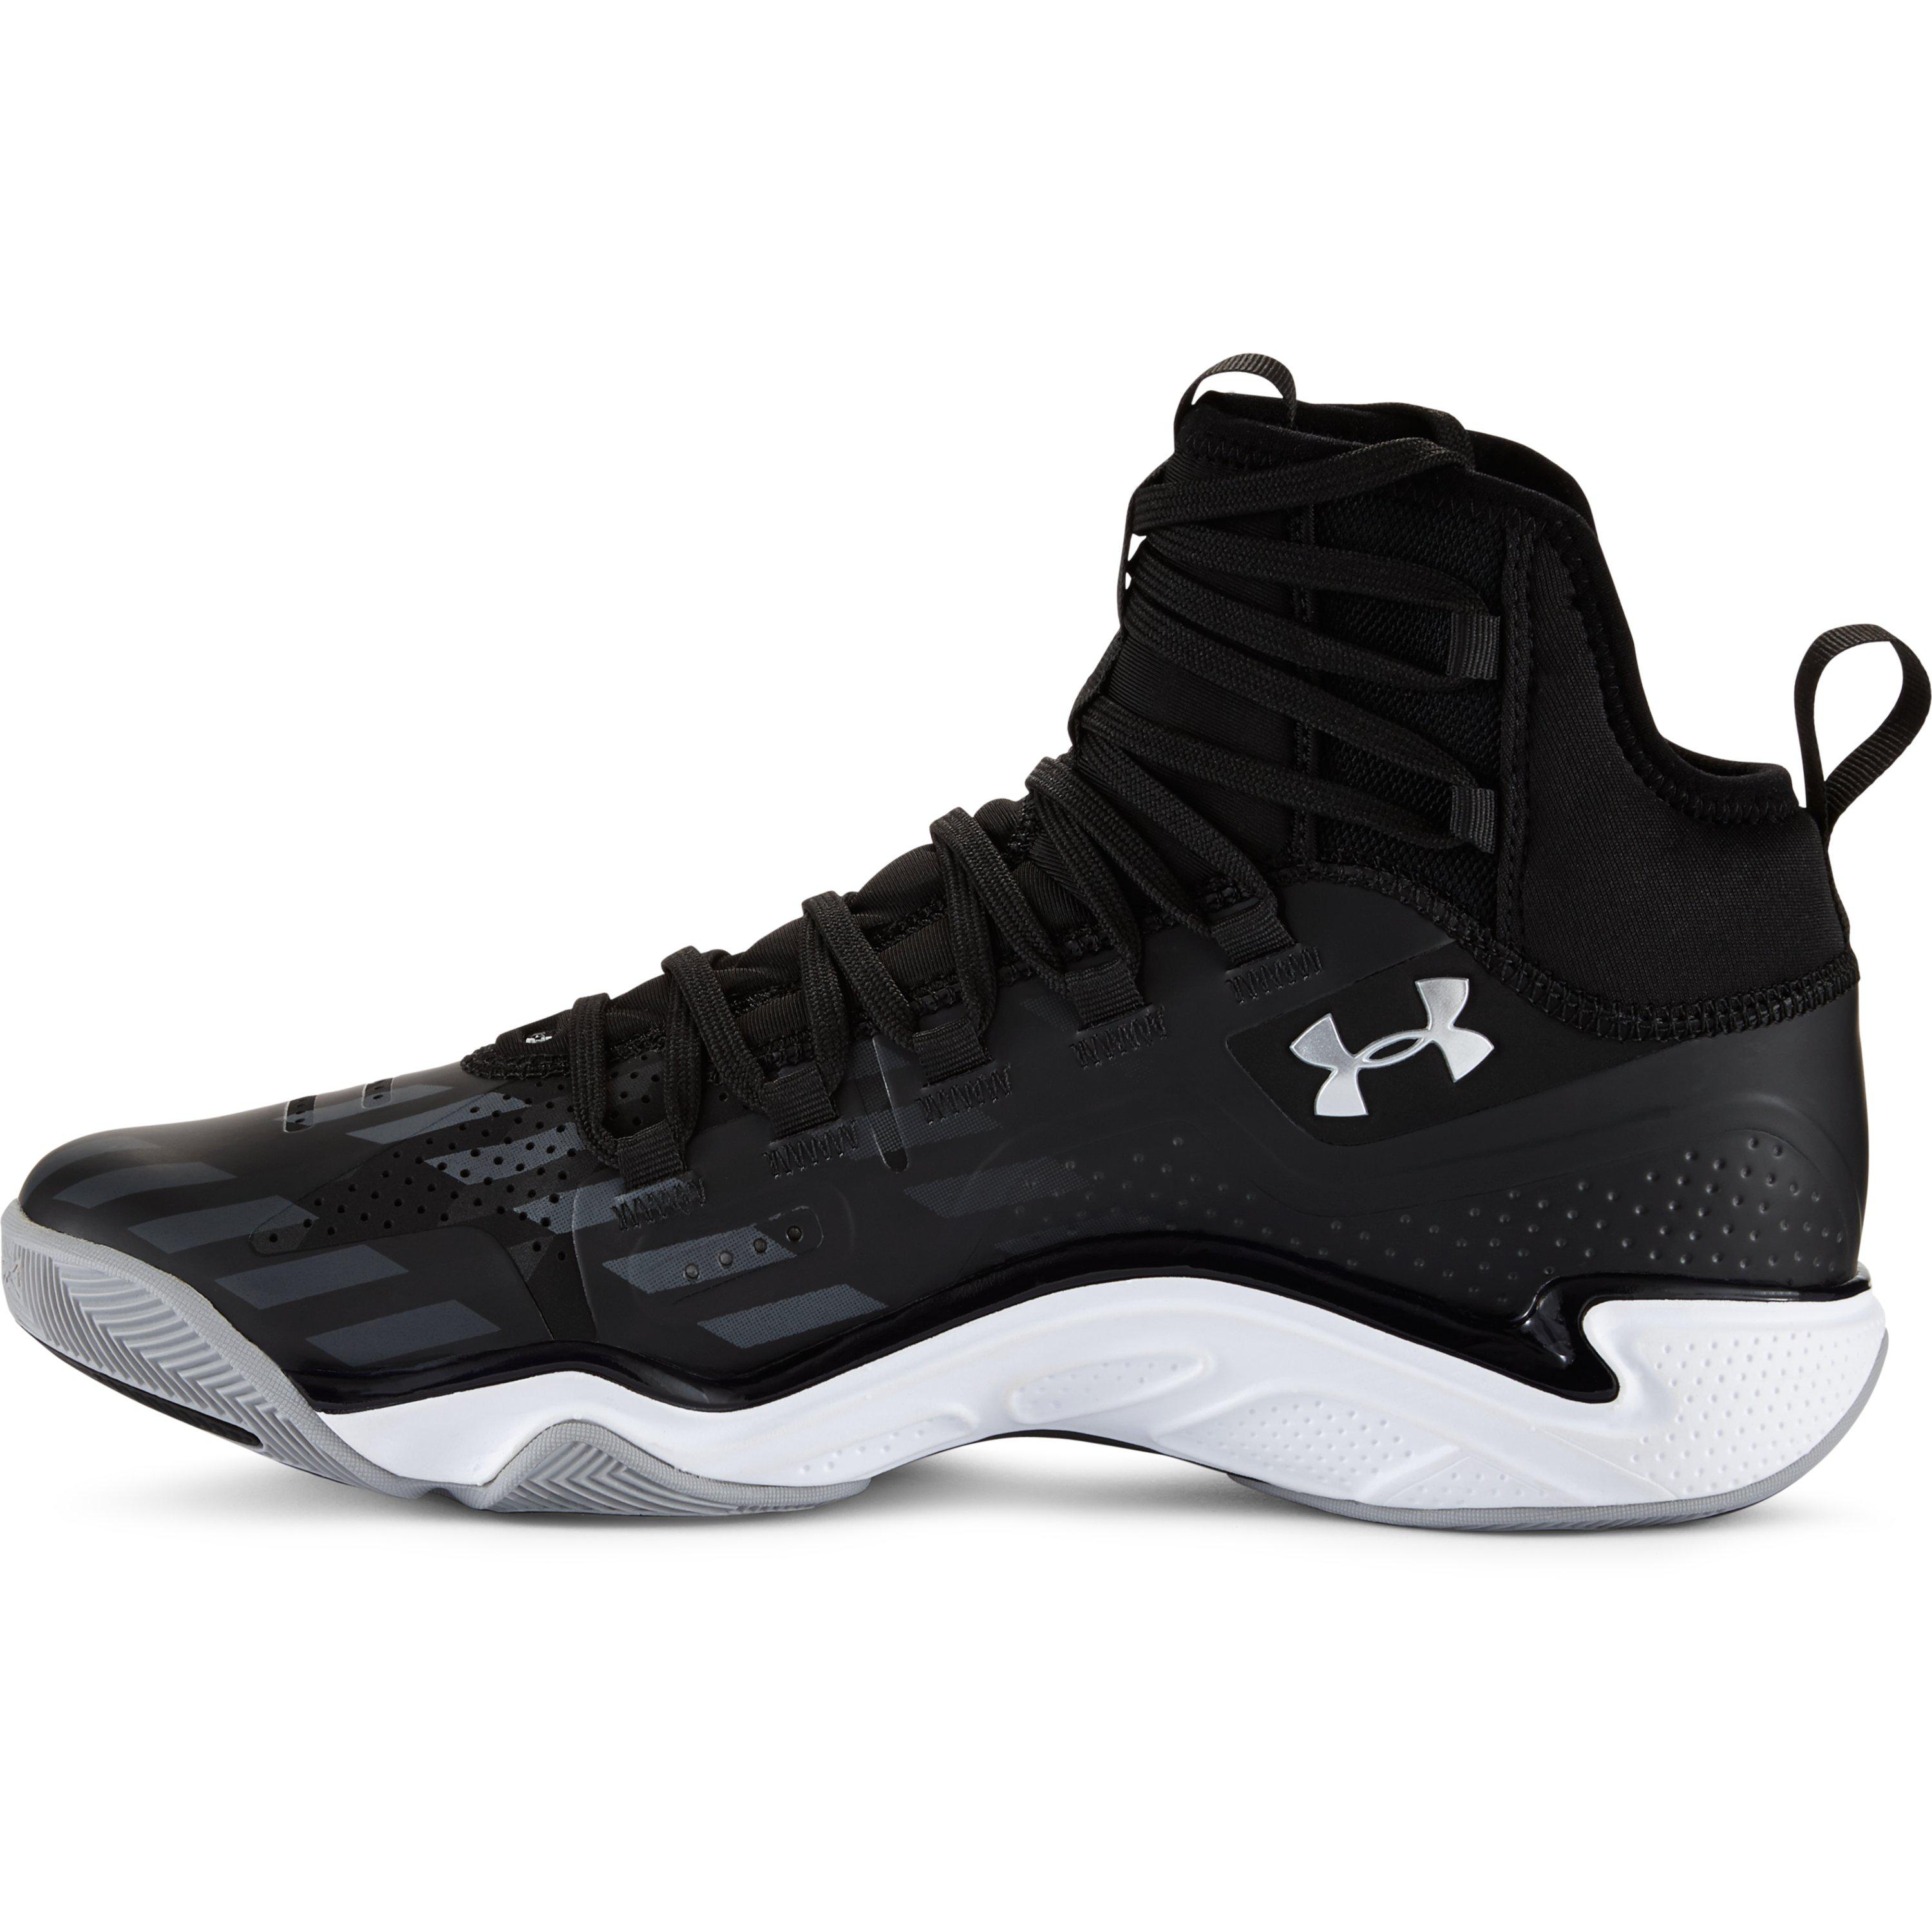 ua micro g basketball shoes